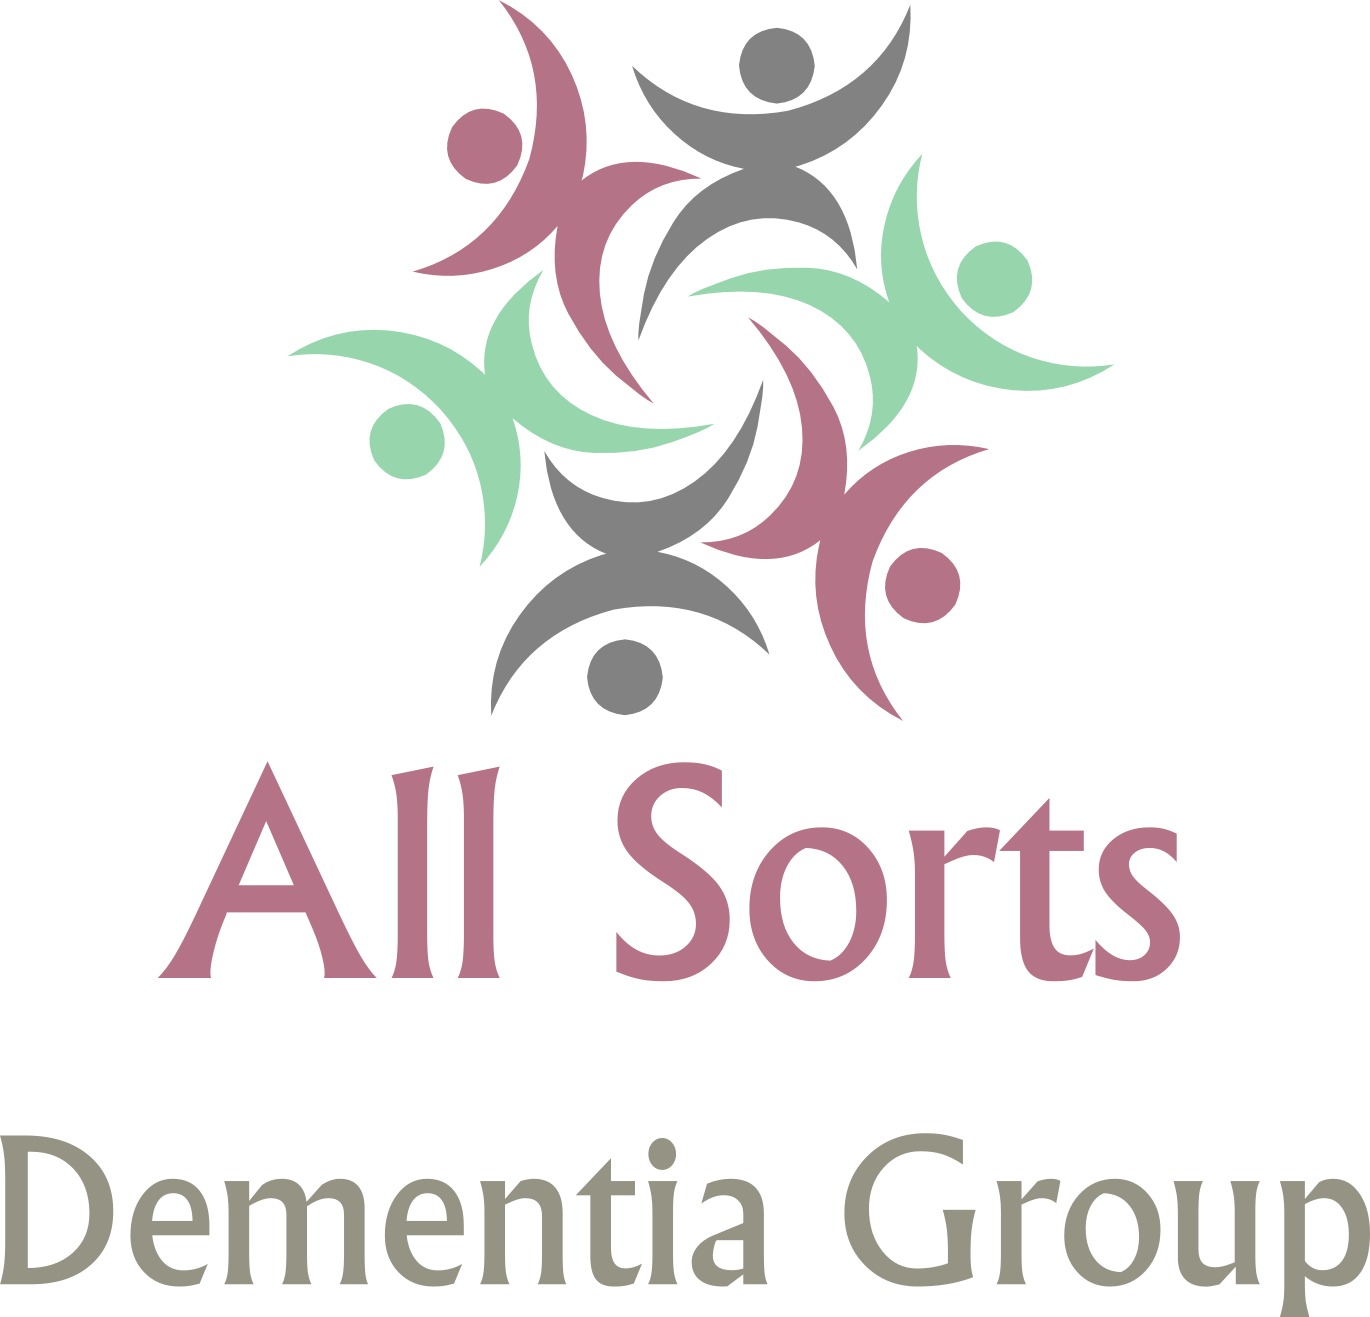 All Sorts Dementia Group